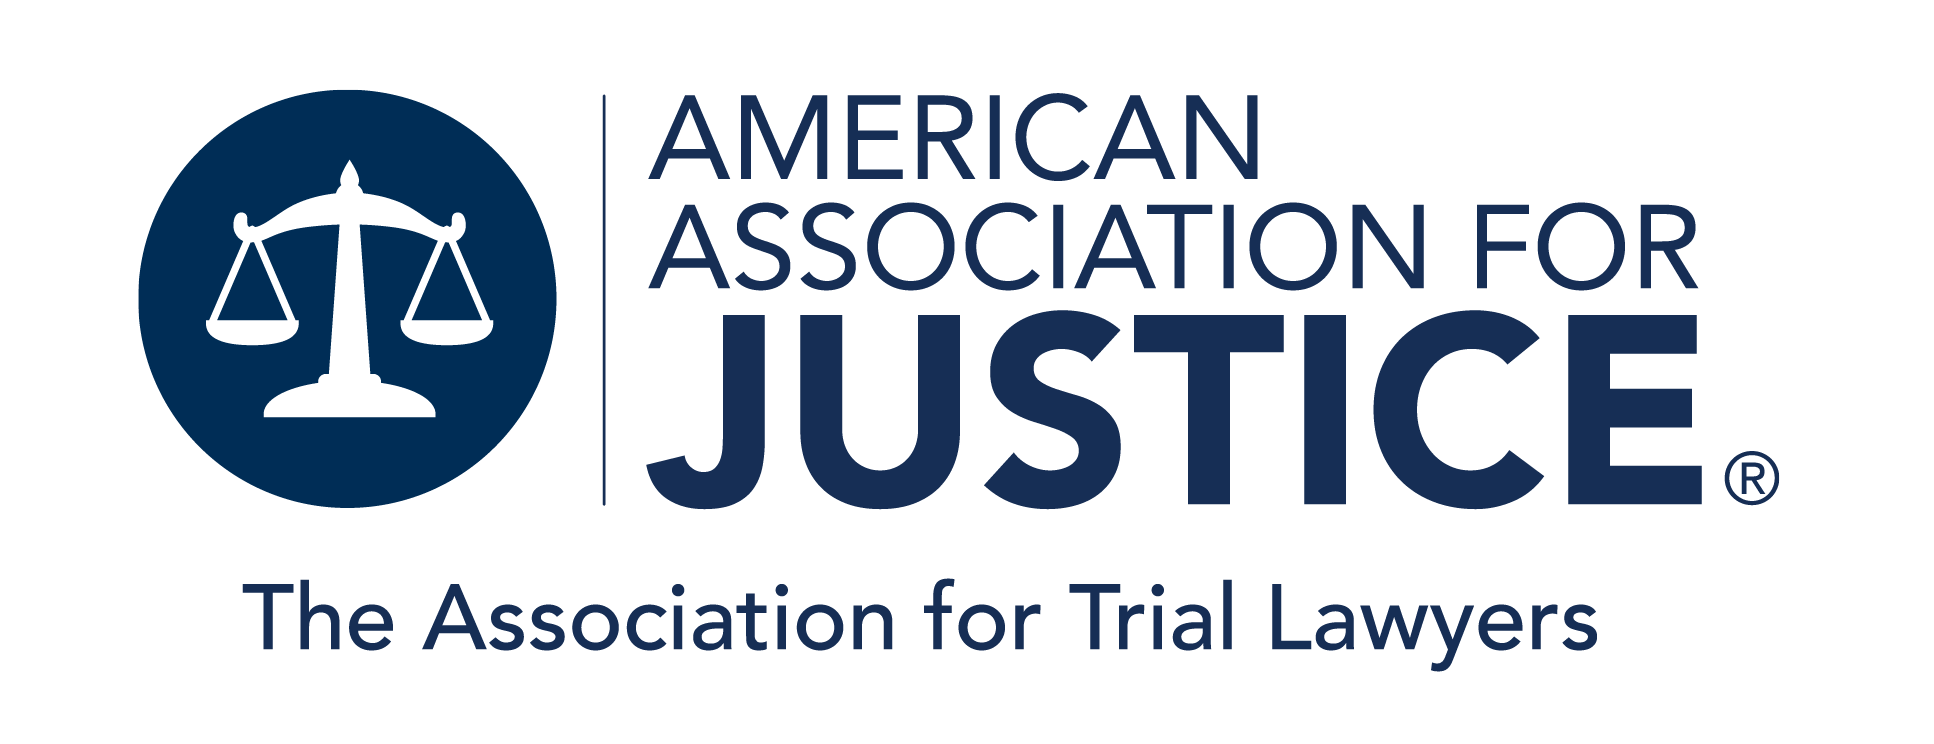 American Association for Justice | Ijustgothit.com